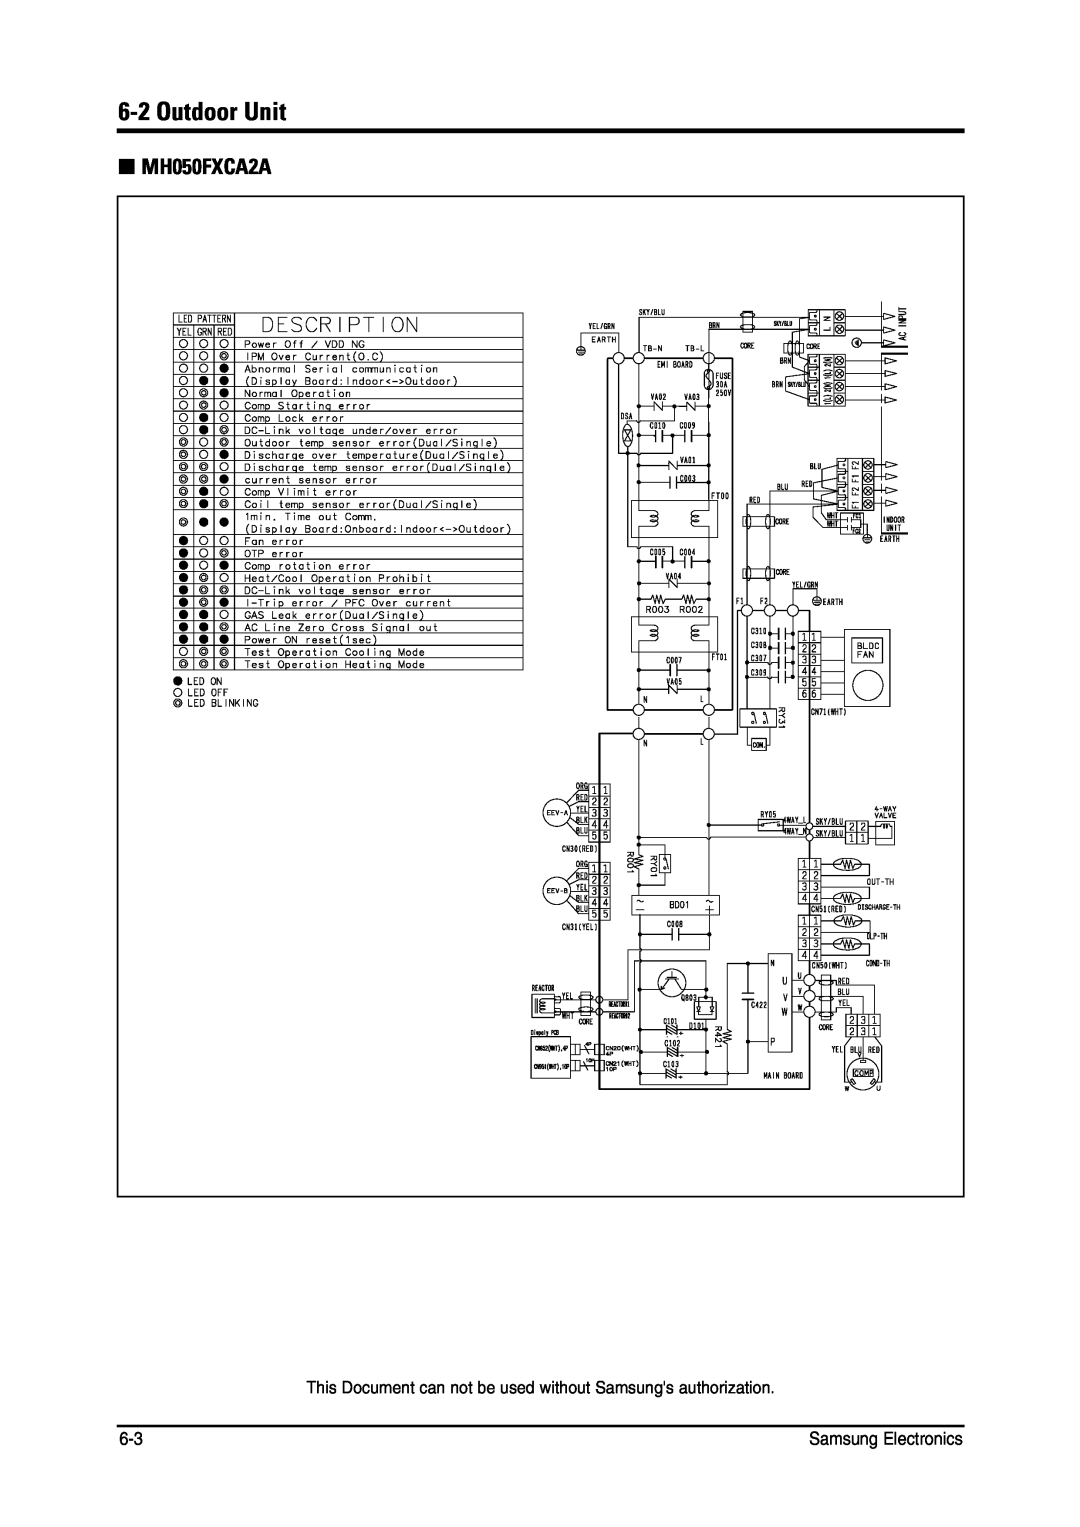 Samsung MH026FNCA service manual 6-2Outdoor Unit, MH050FXCA2A 